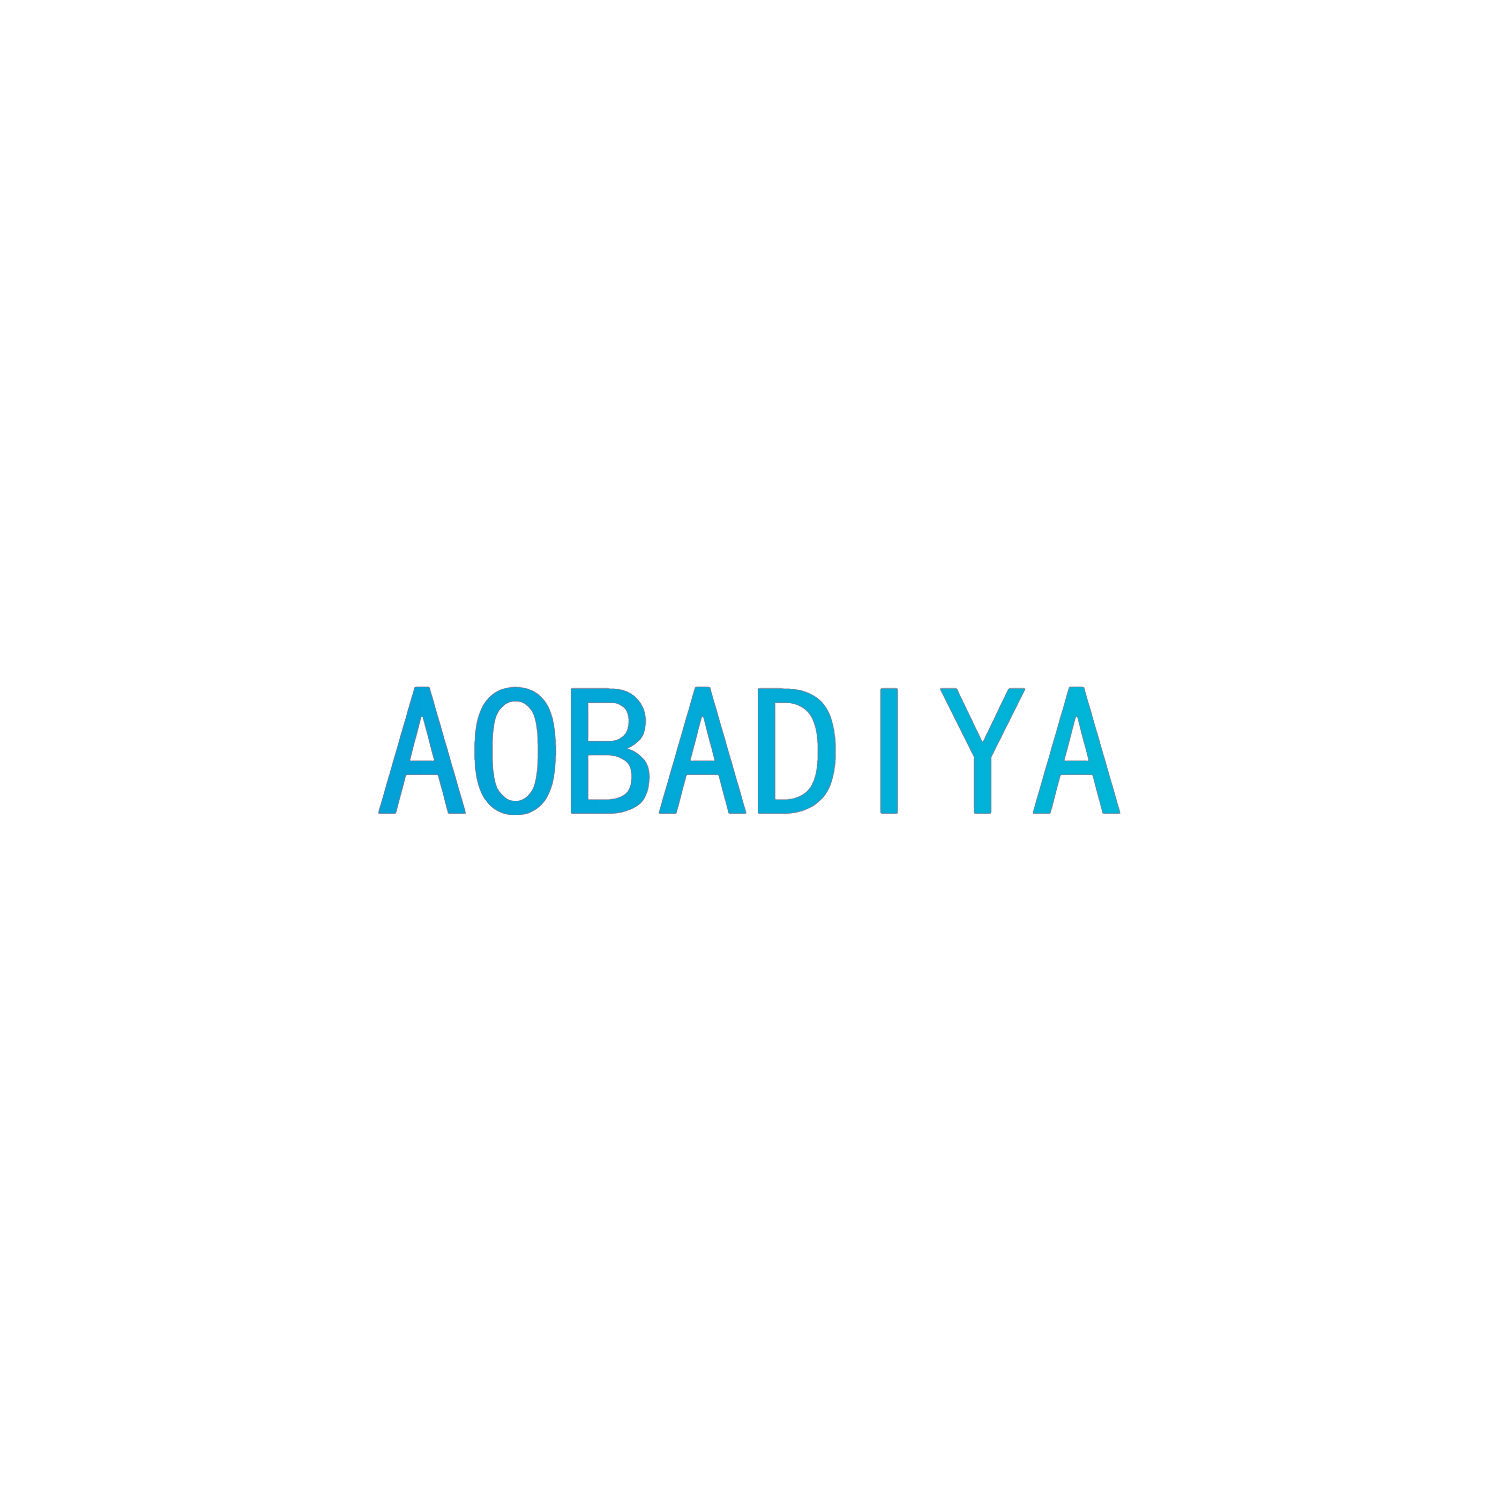 AOBADIYA